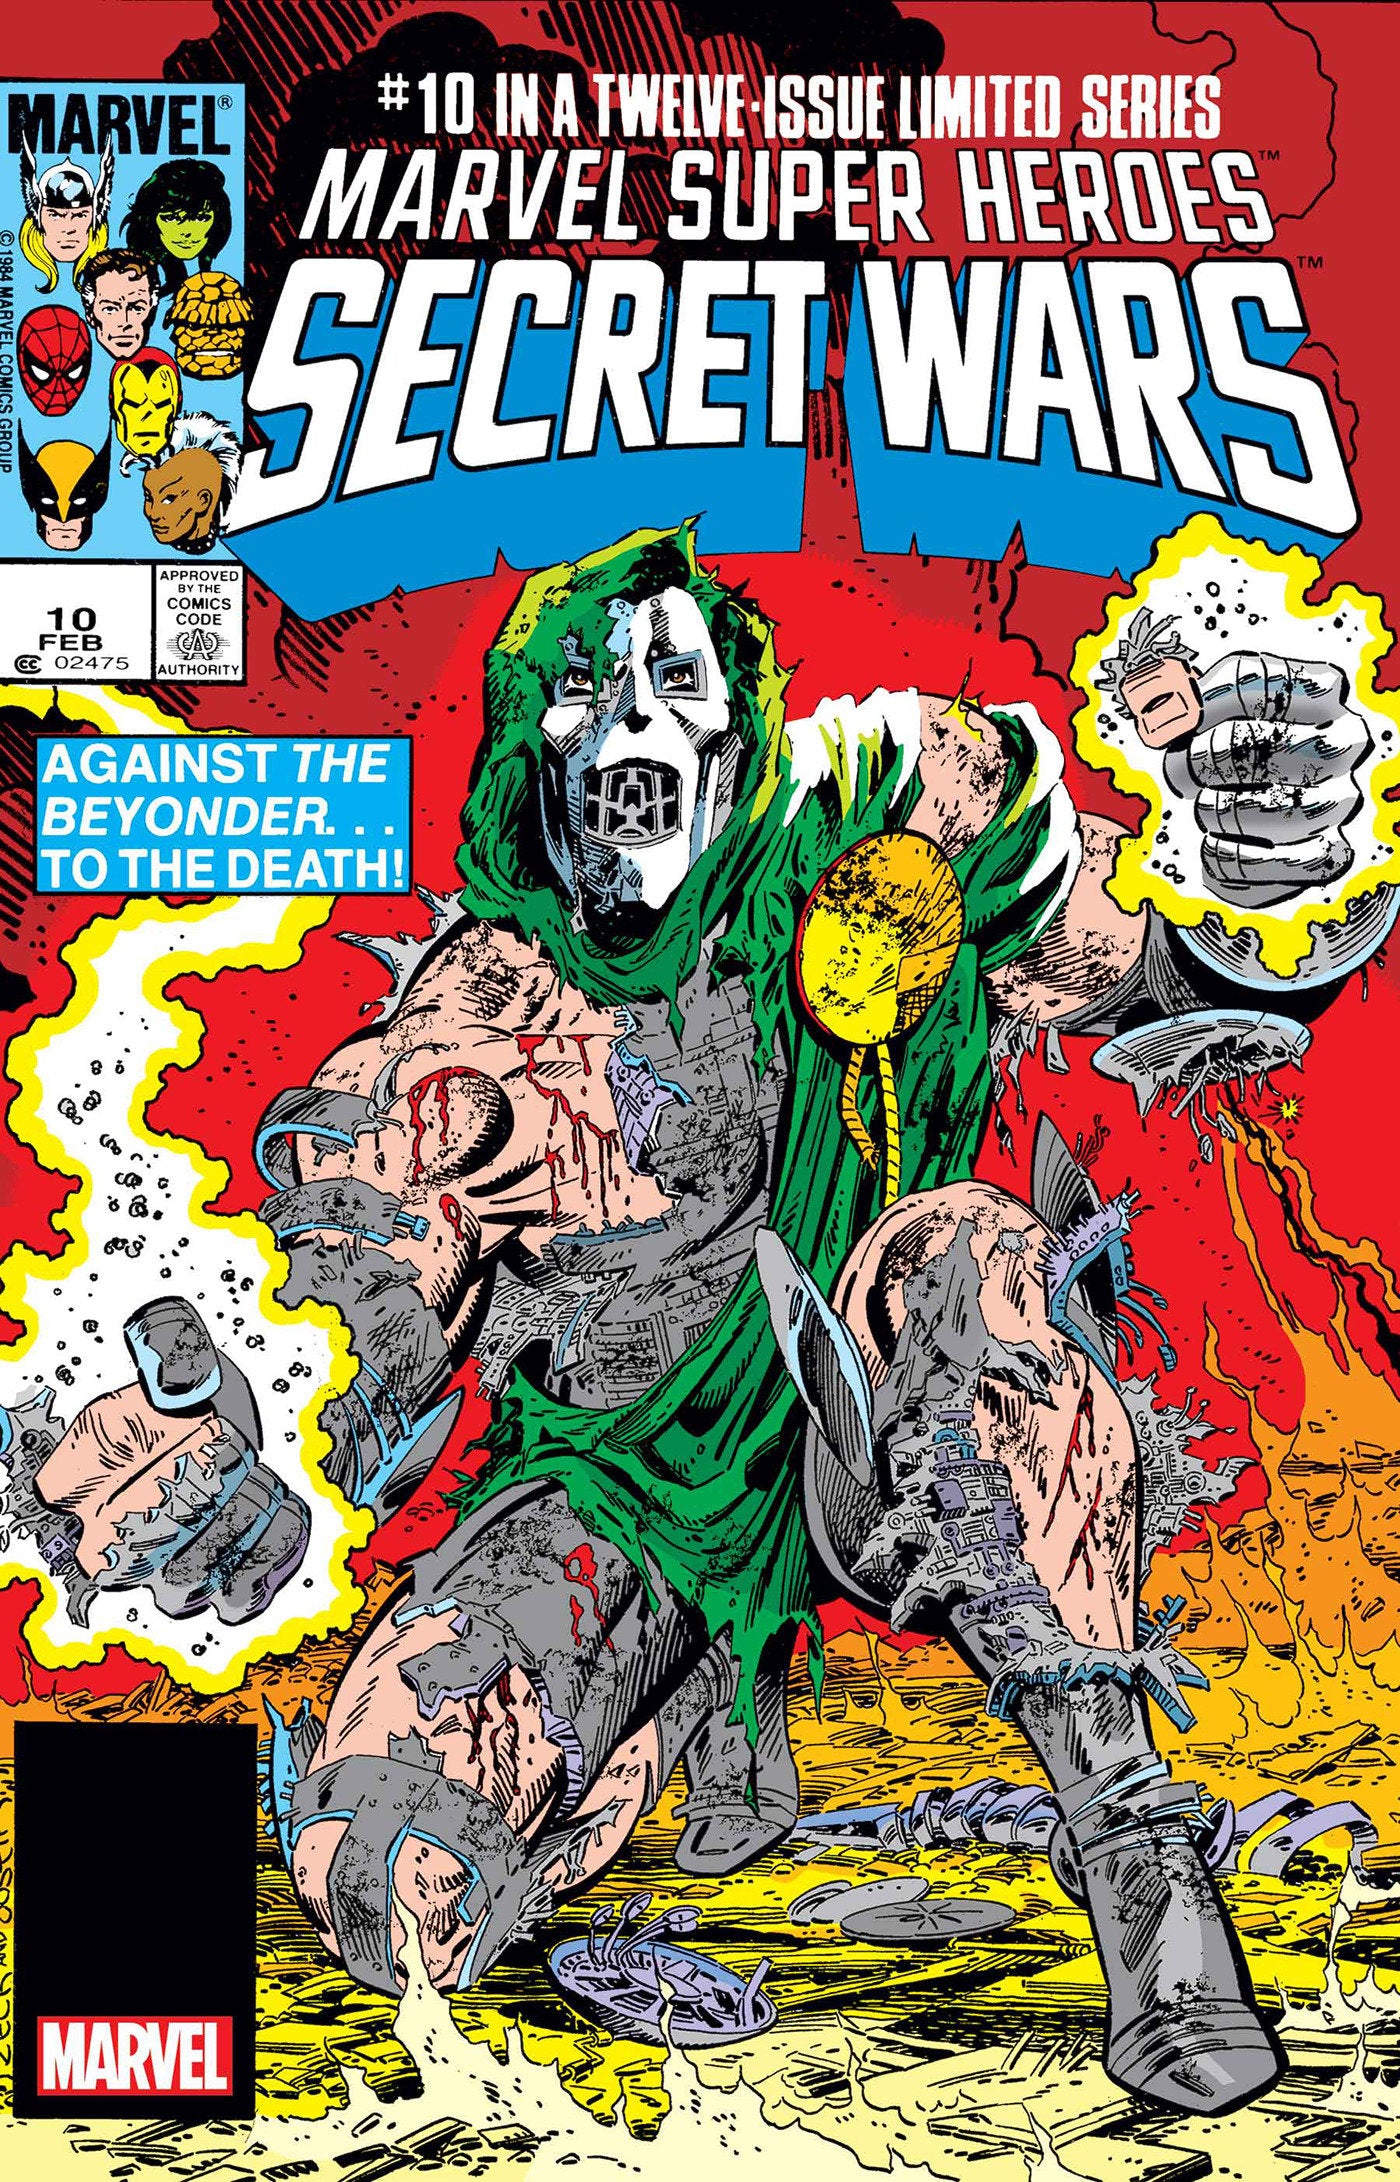 MARVEL SUPER HEROES SECRET WARS #10 FACSIMILE EDITION FOIL VARIANT - End Of The Earth Comics